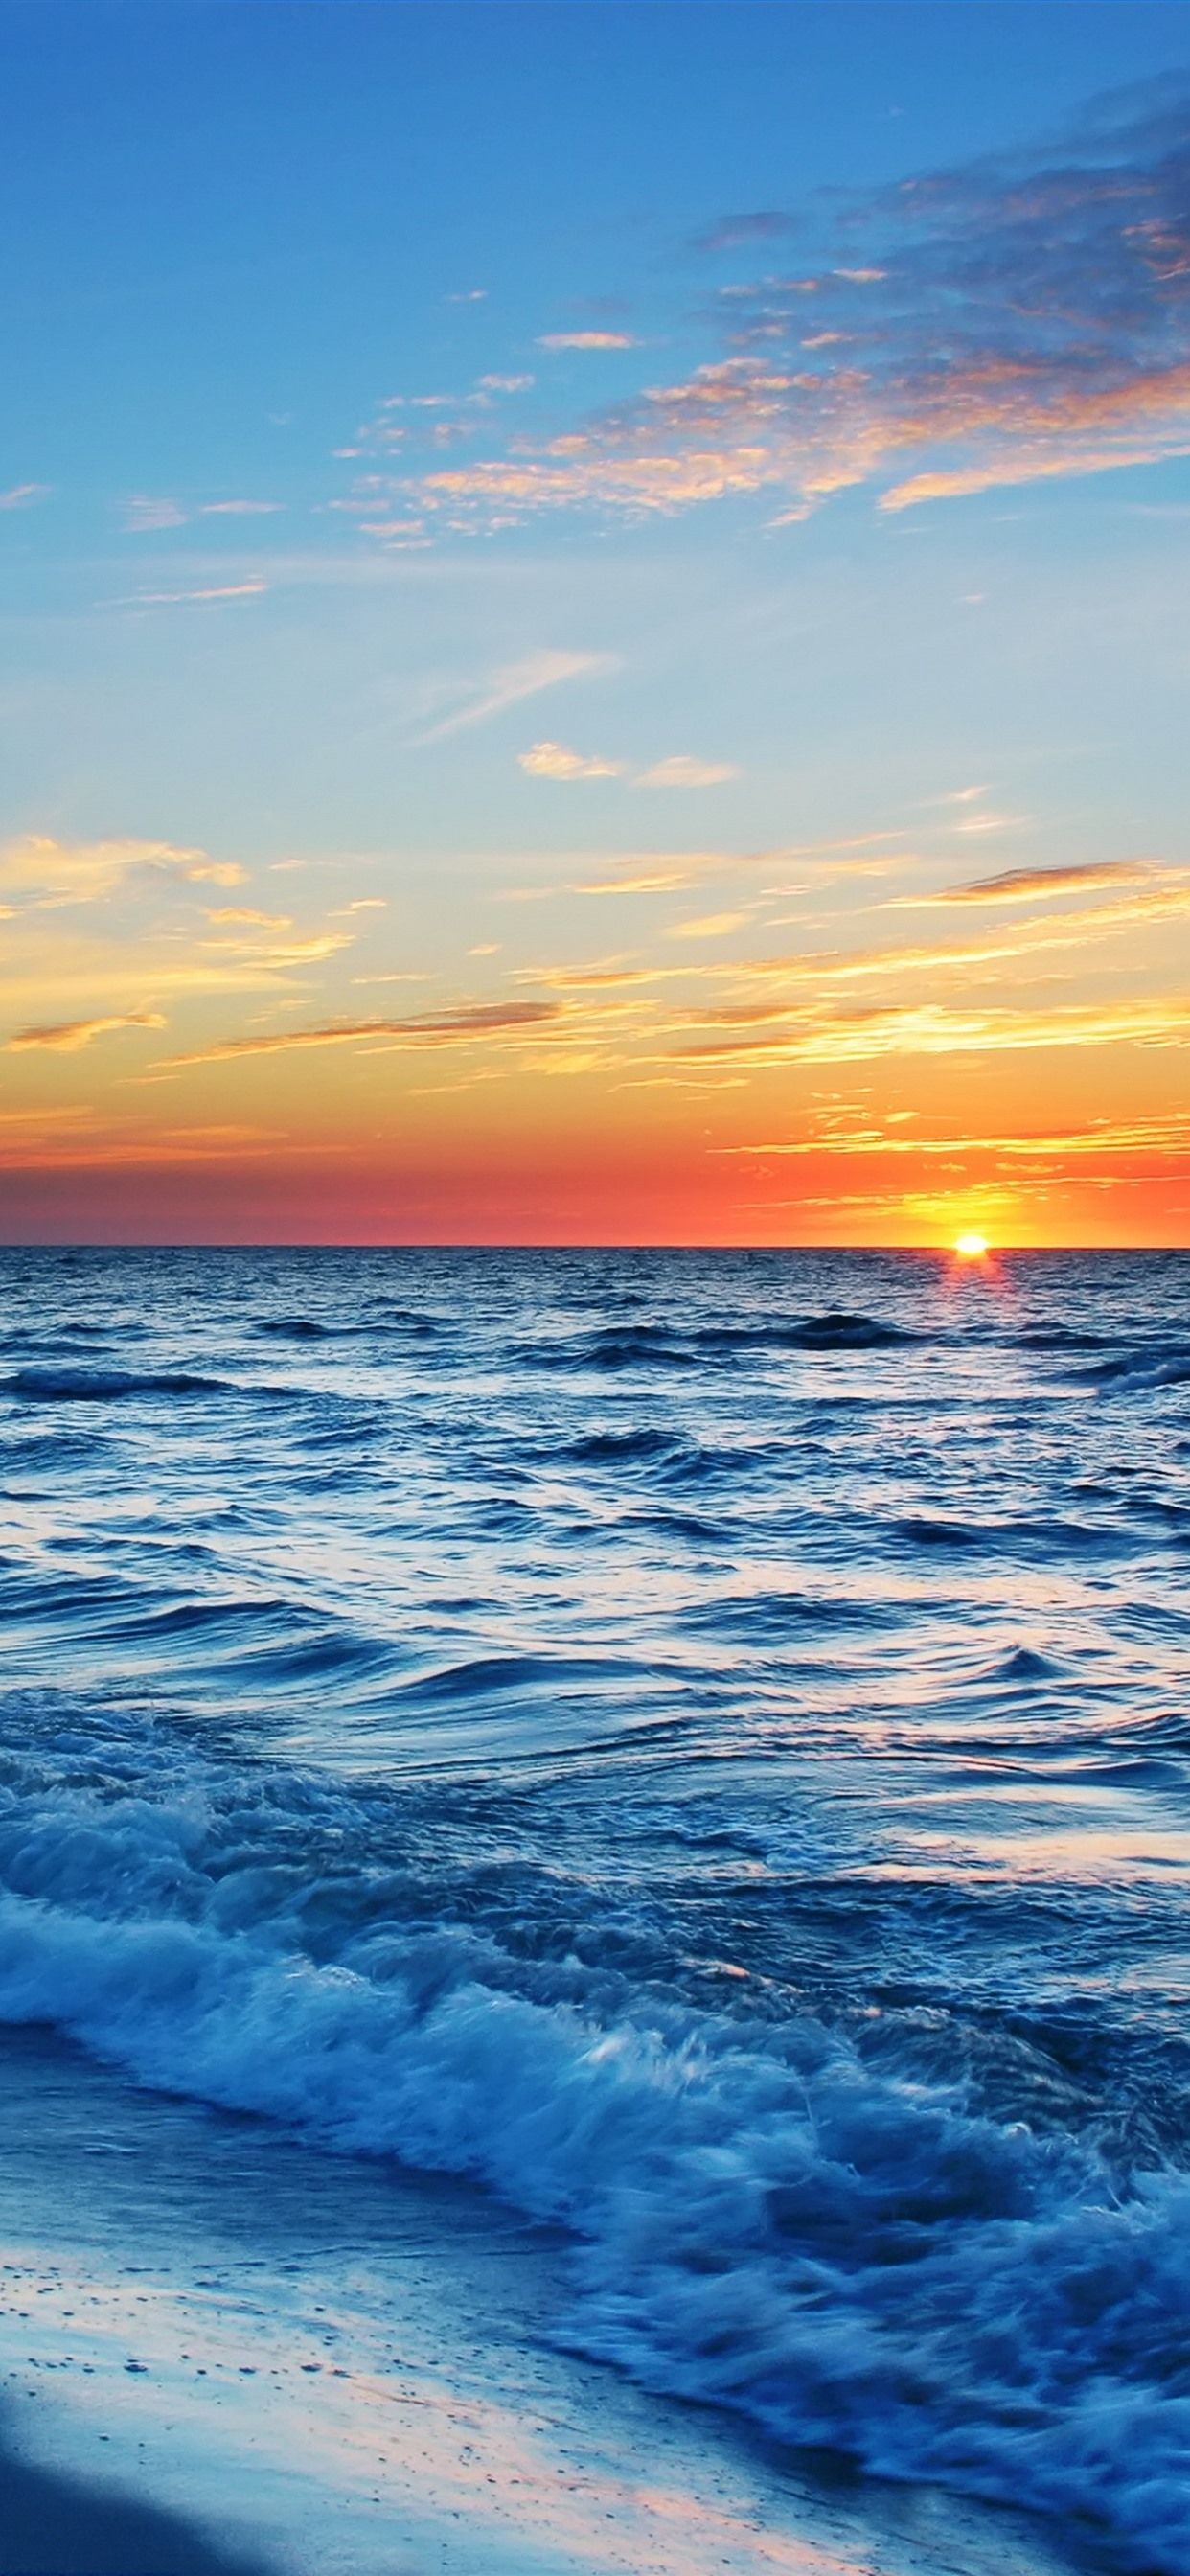  Meer Hintergrundbild 1242x2688. Meer, Wellen, Strand, Sonnenuntergang, Wolken 5120x2880 UHD 5K Hintergrundbilder, HD, Bild